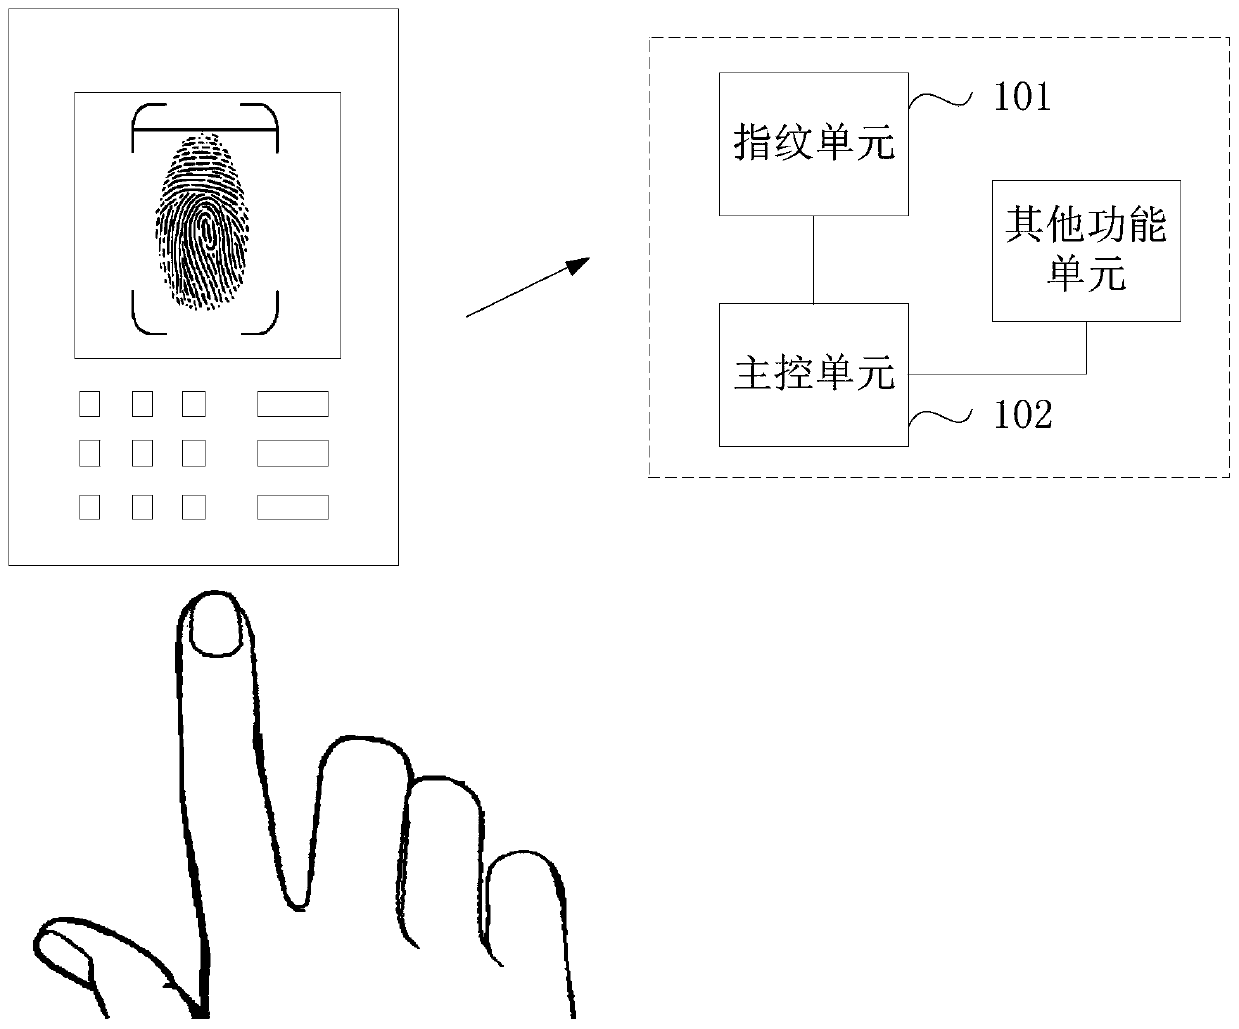 Fingerprint registration method and device and fingerprint verification method and device